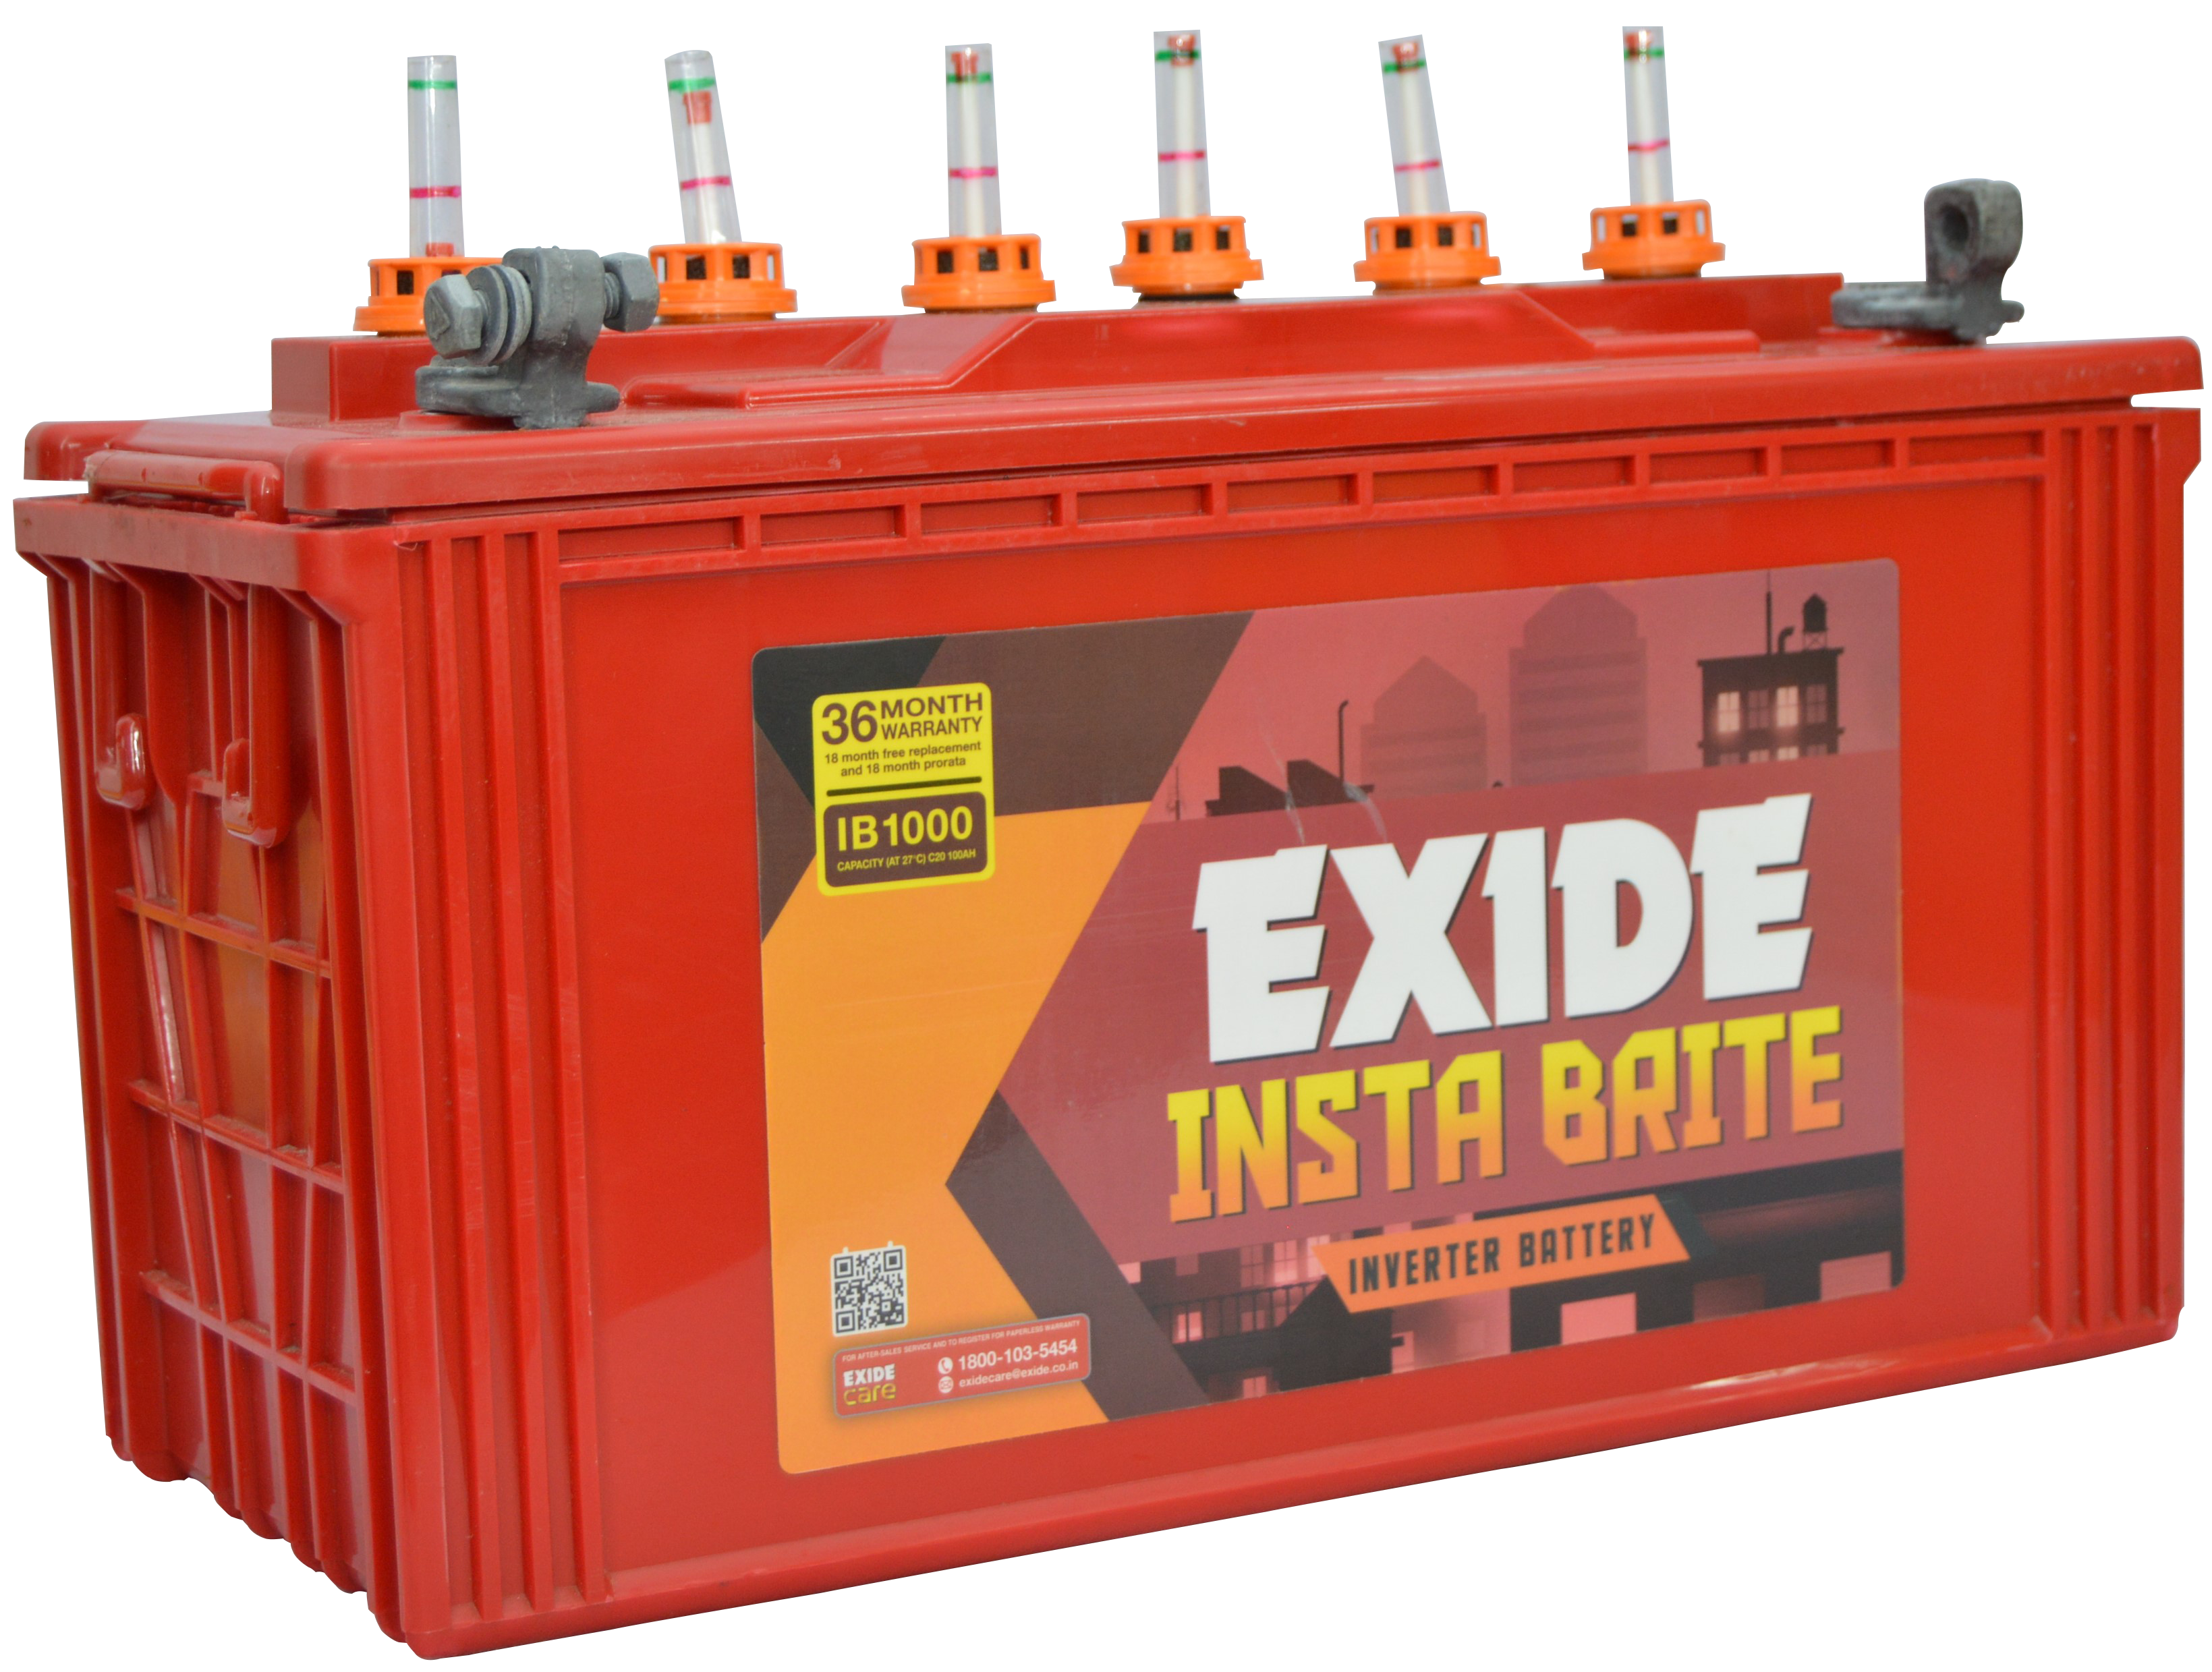 exide-insta-brite-1000-12v-100ah-battery-price-in-chennai